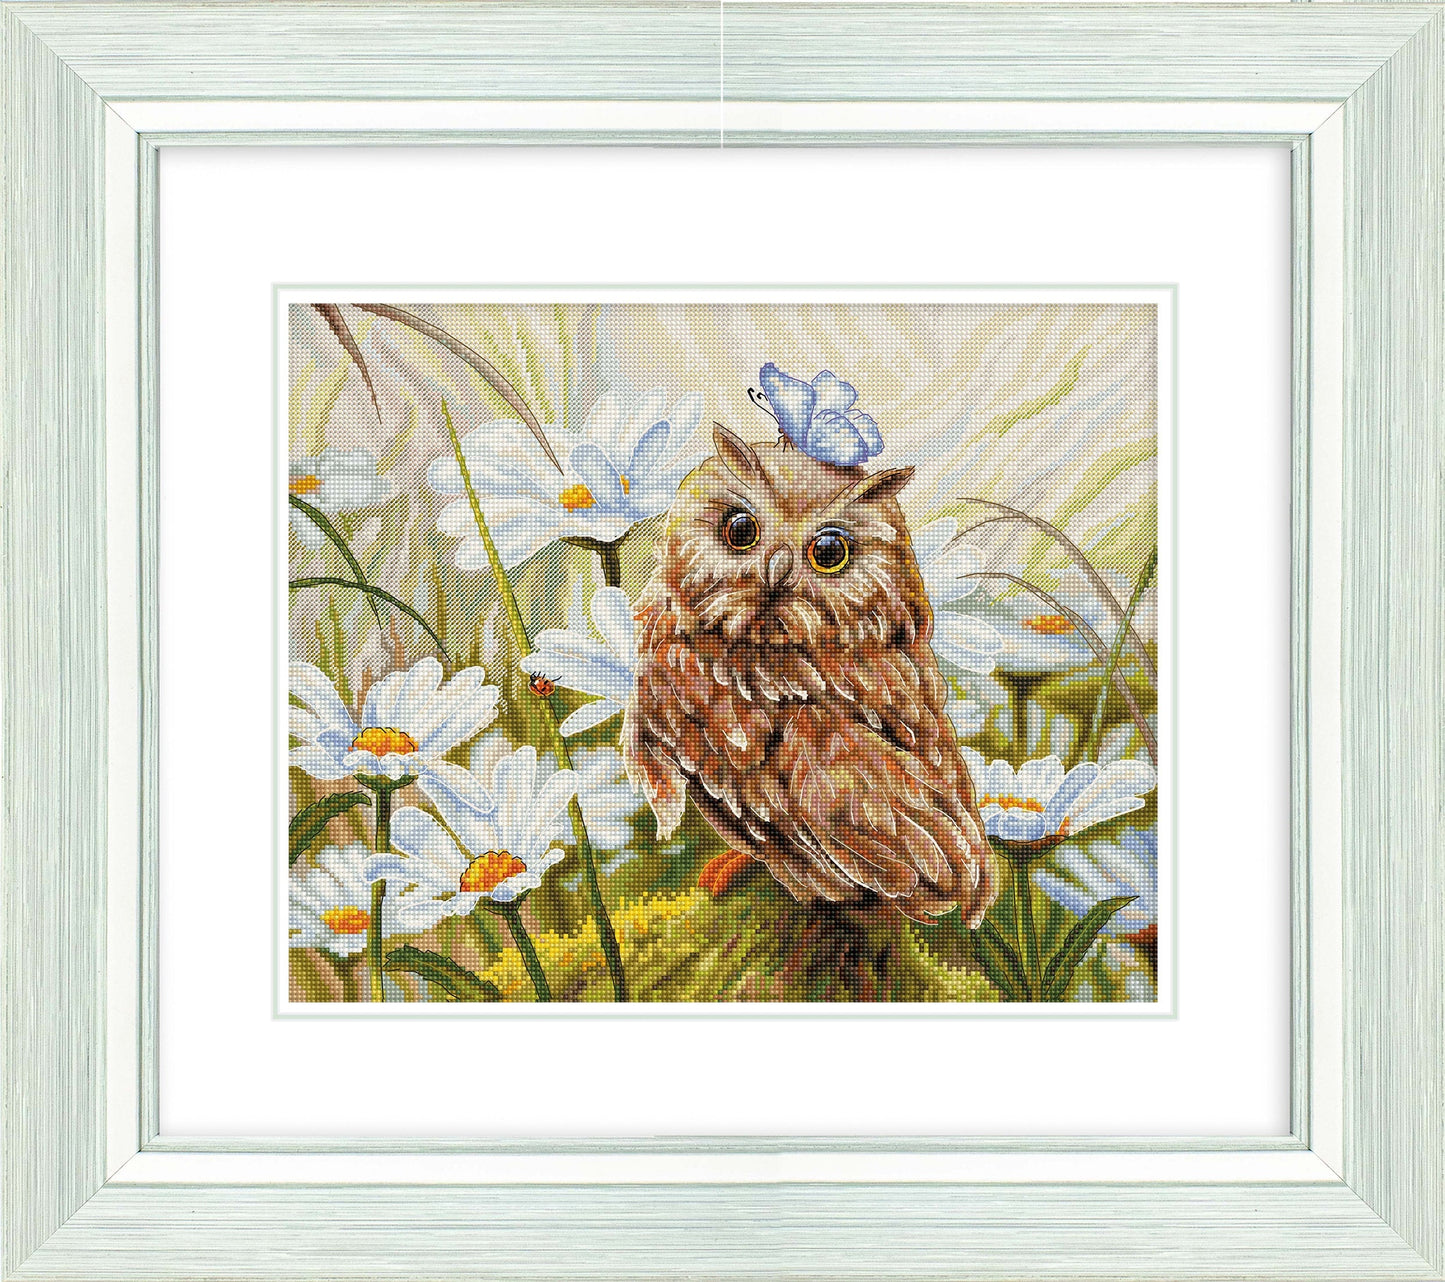 Cross Stitch Kit Luca-S - Lucky Owl, B7011